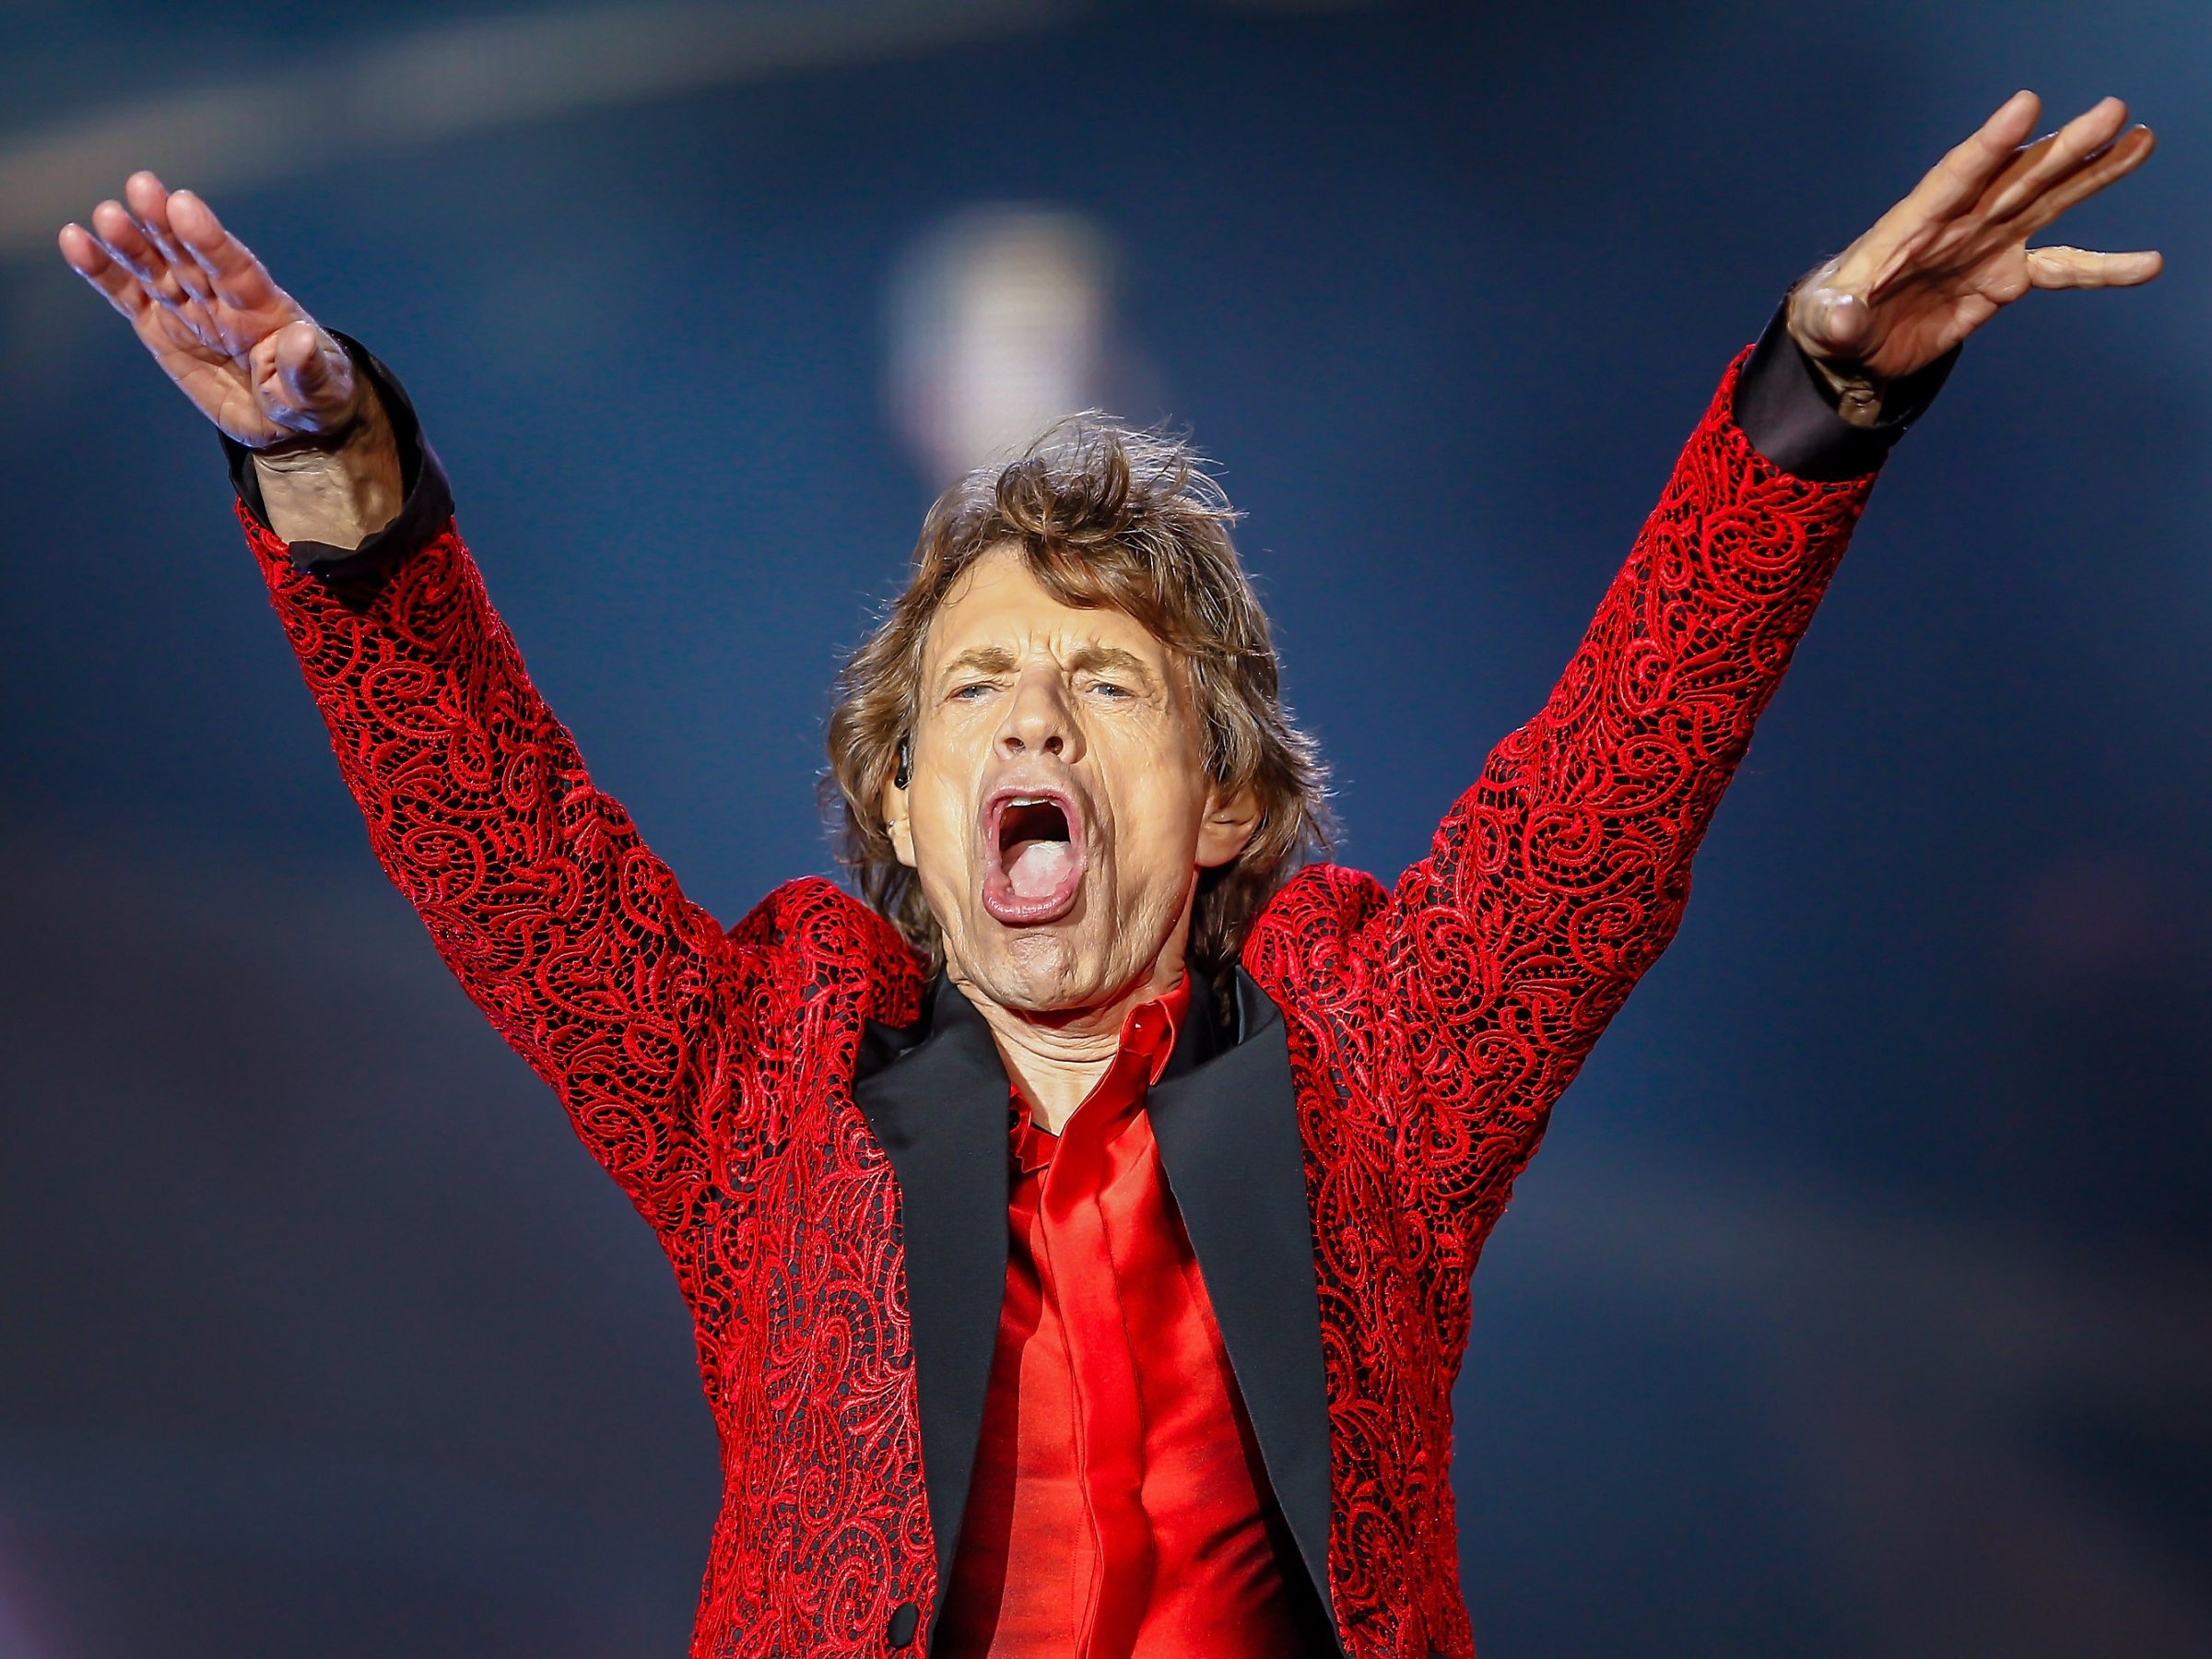 Mick Jagger, HD wallpapers, Rock music icon, Powerful stage presence, 2400x1800 HD Desktop